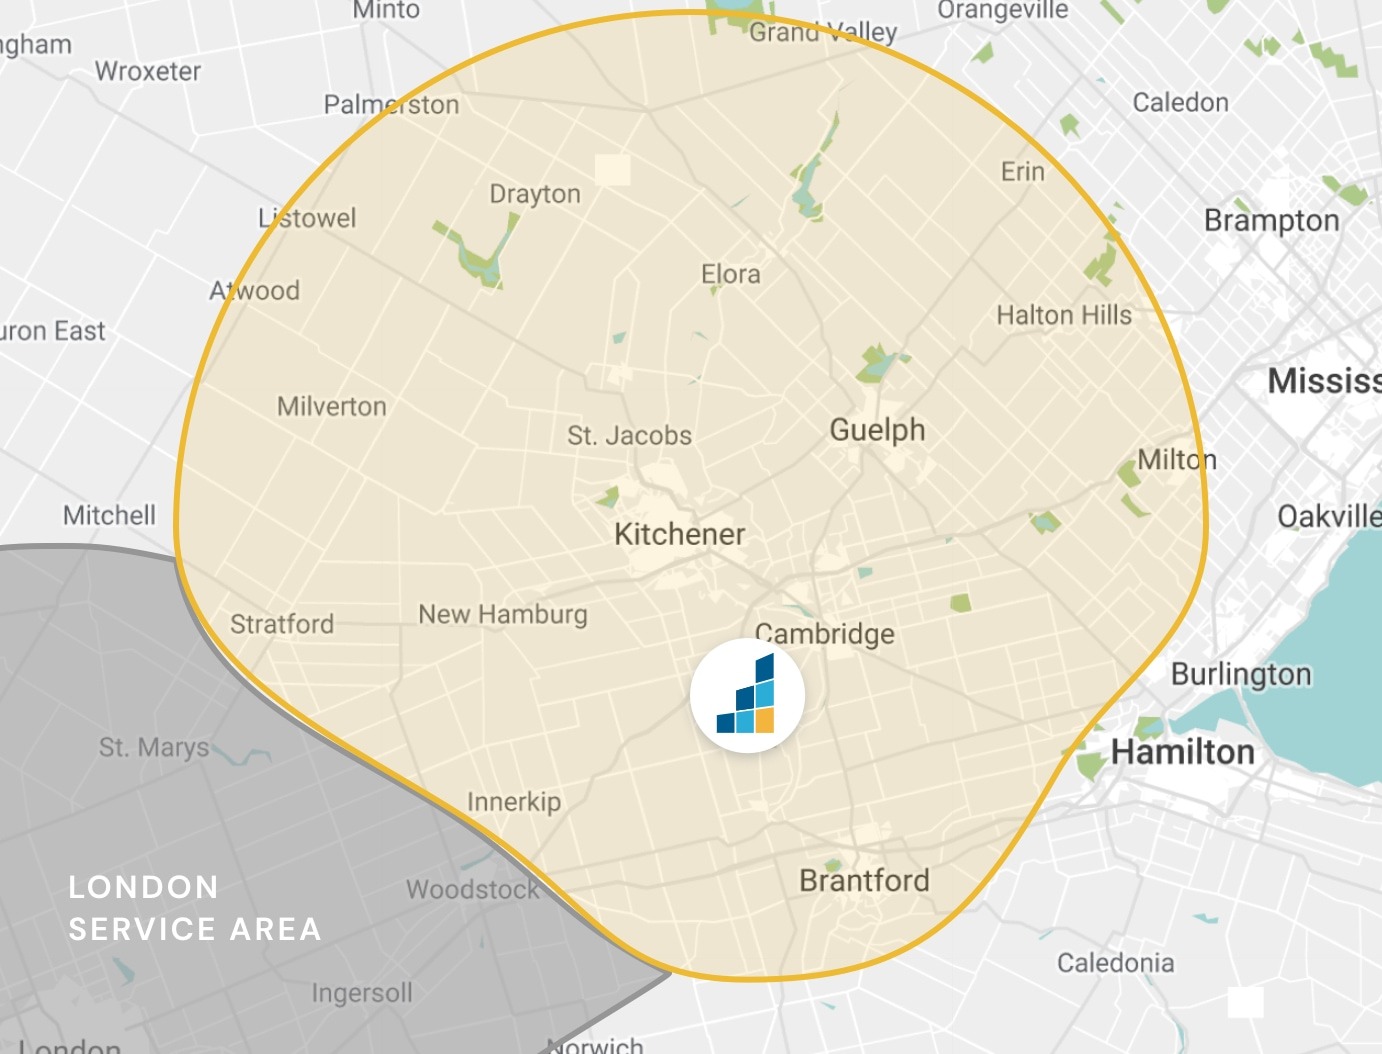 Kitchener's Location Map